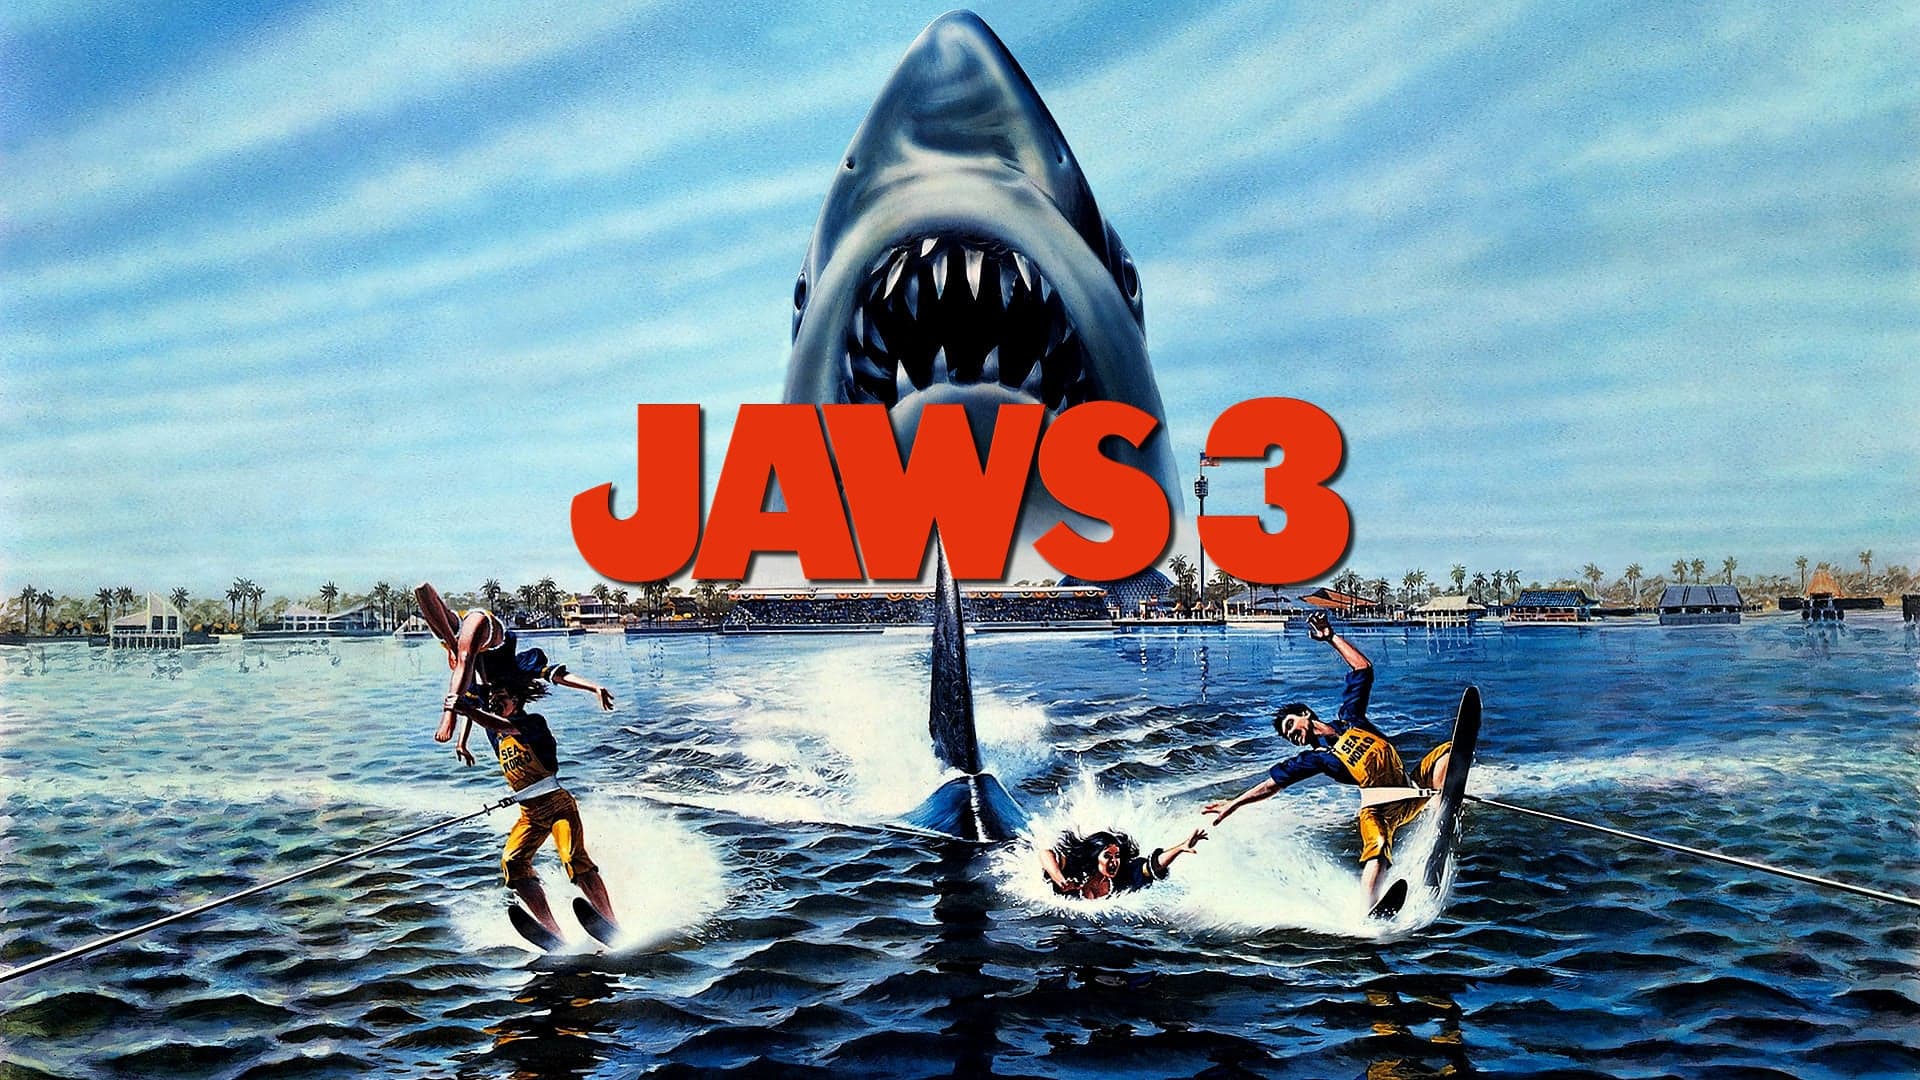 Watch Jaws 3 Online | Stream Full Movies